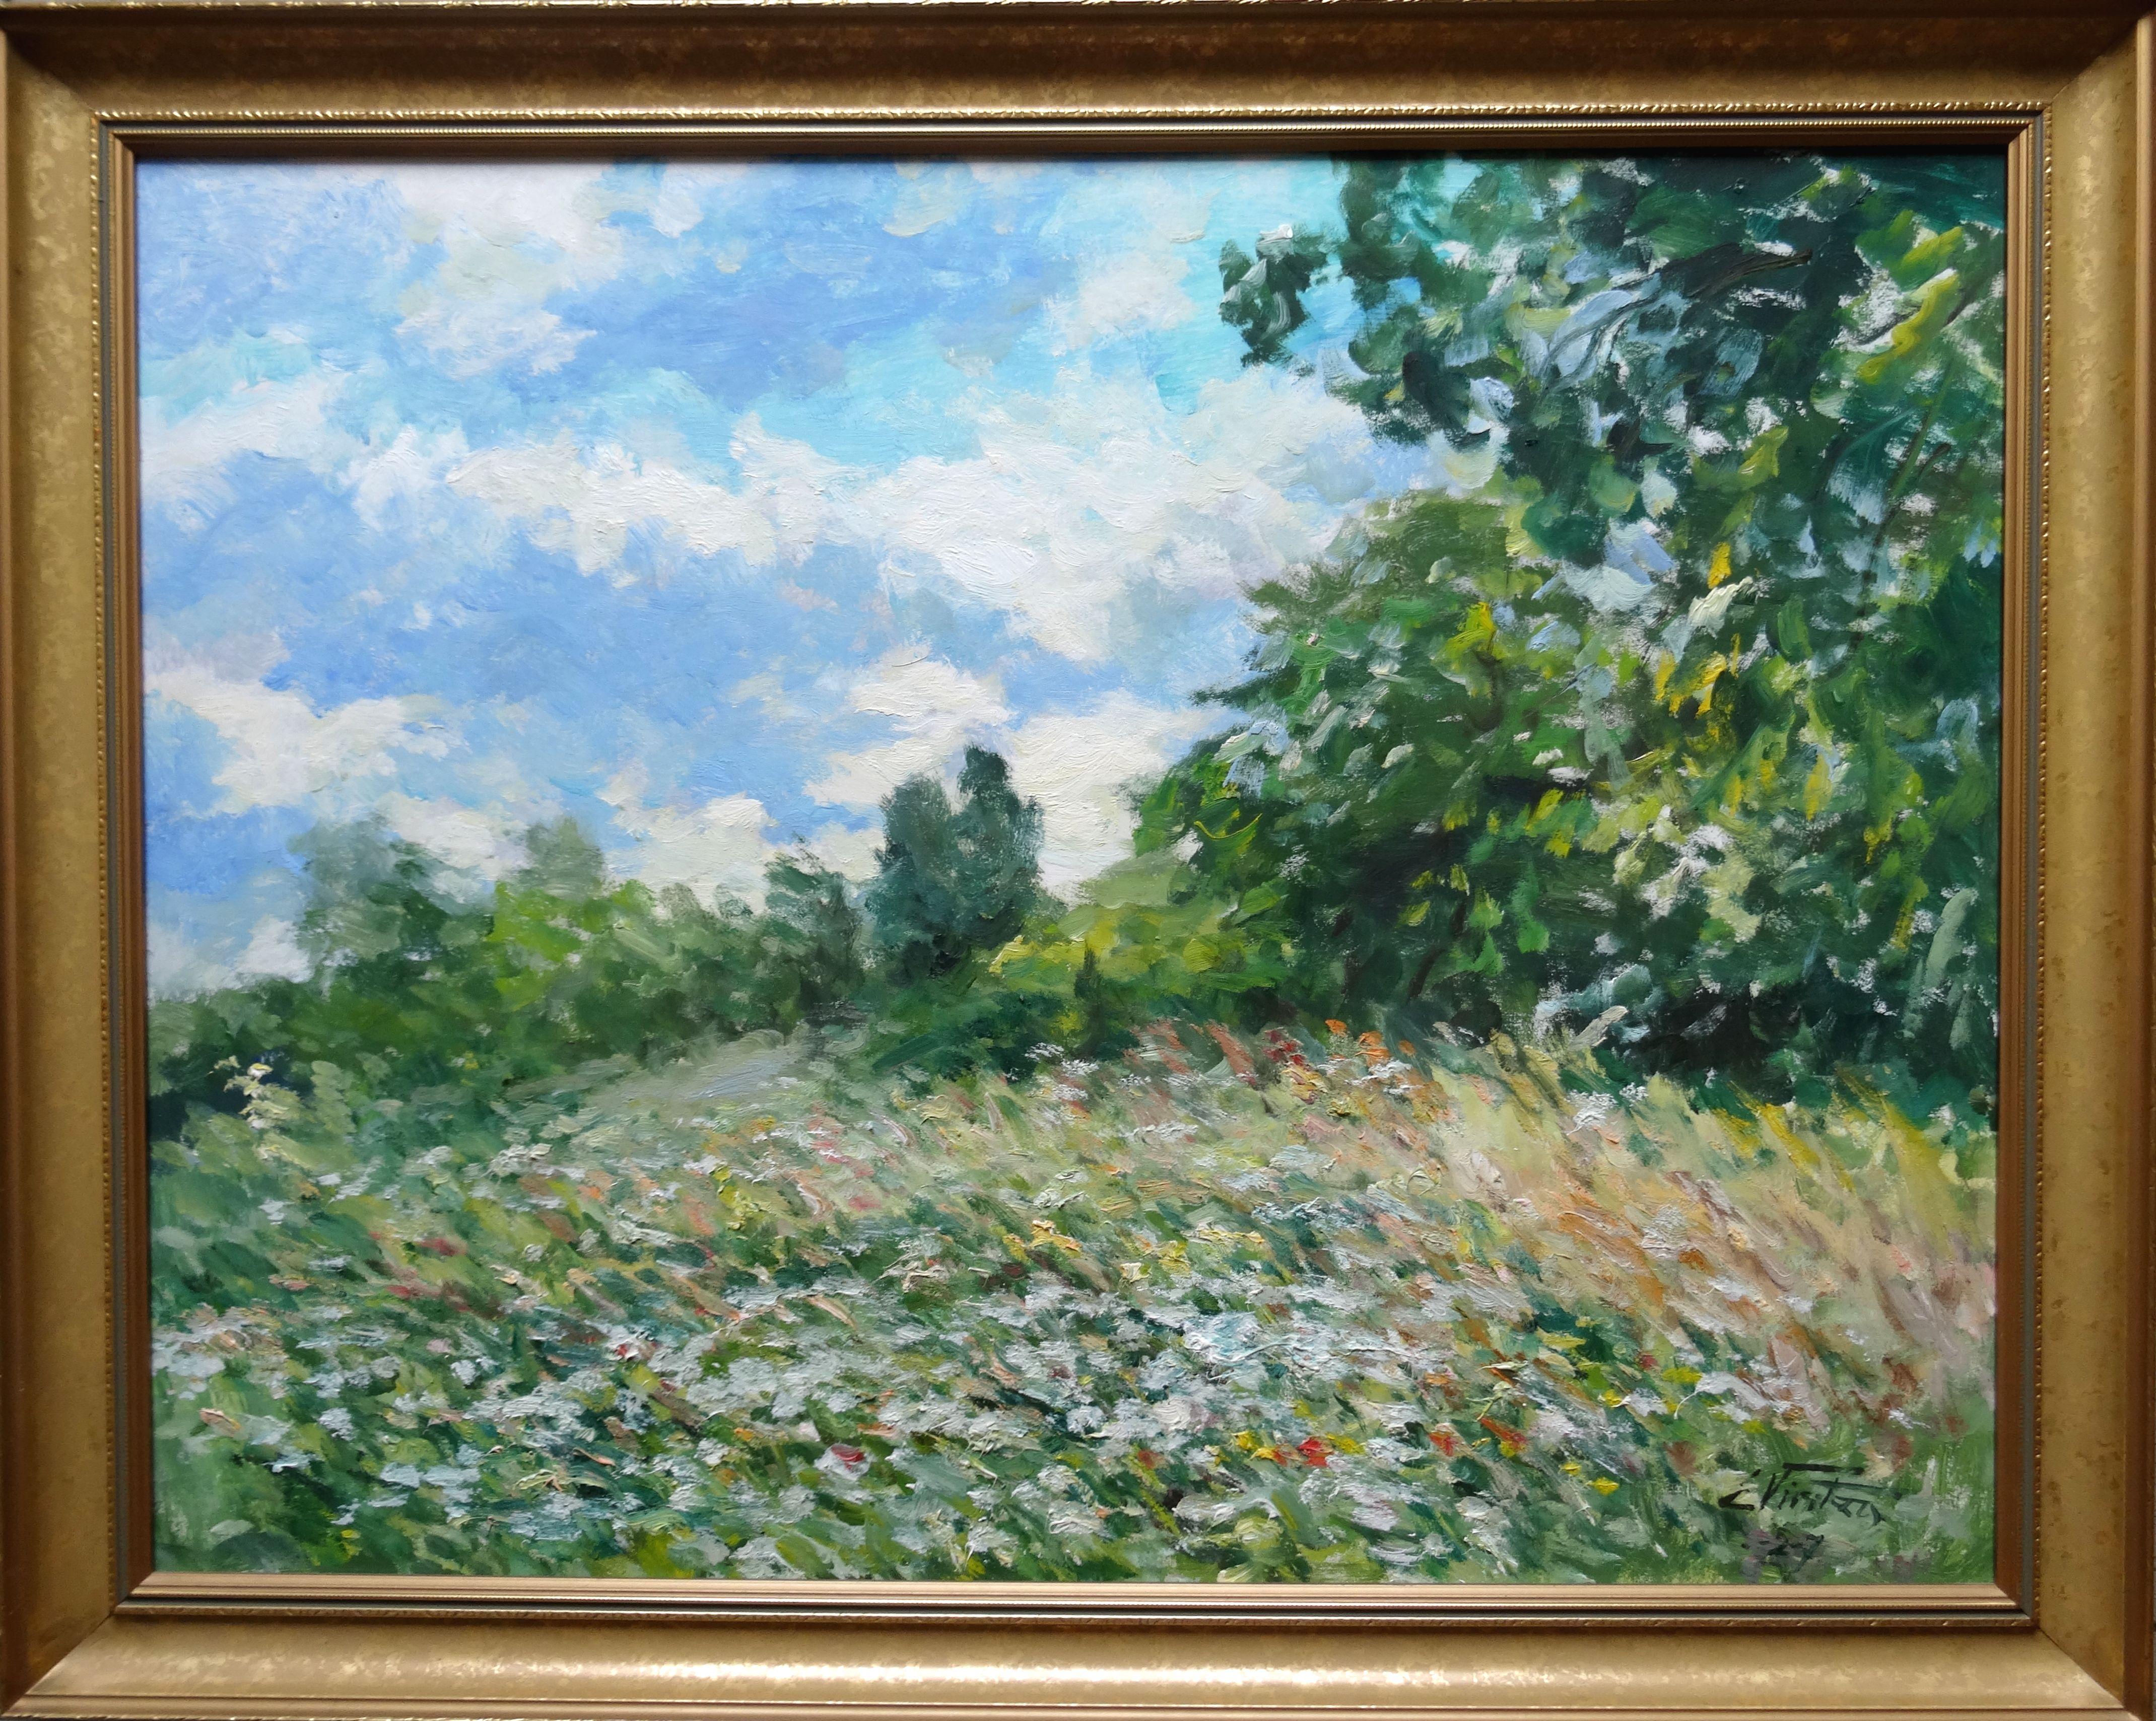 Flowering forest edge. 2007, cardboard, oil, 67x86 cm - Painting by Edgars Vinters